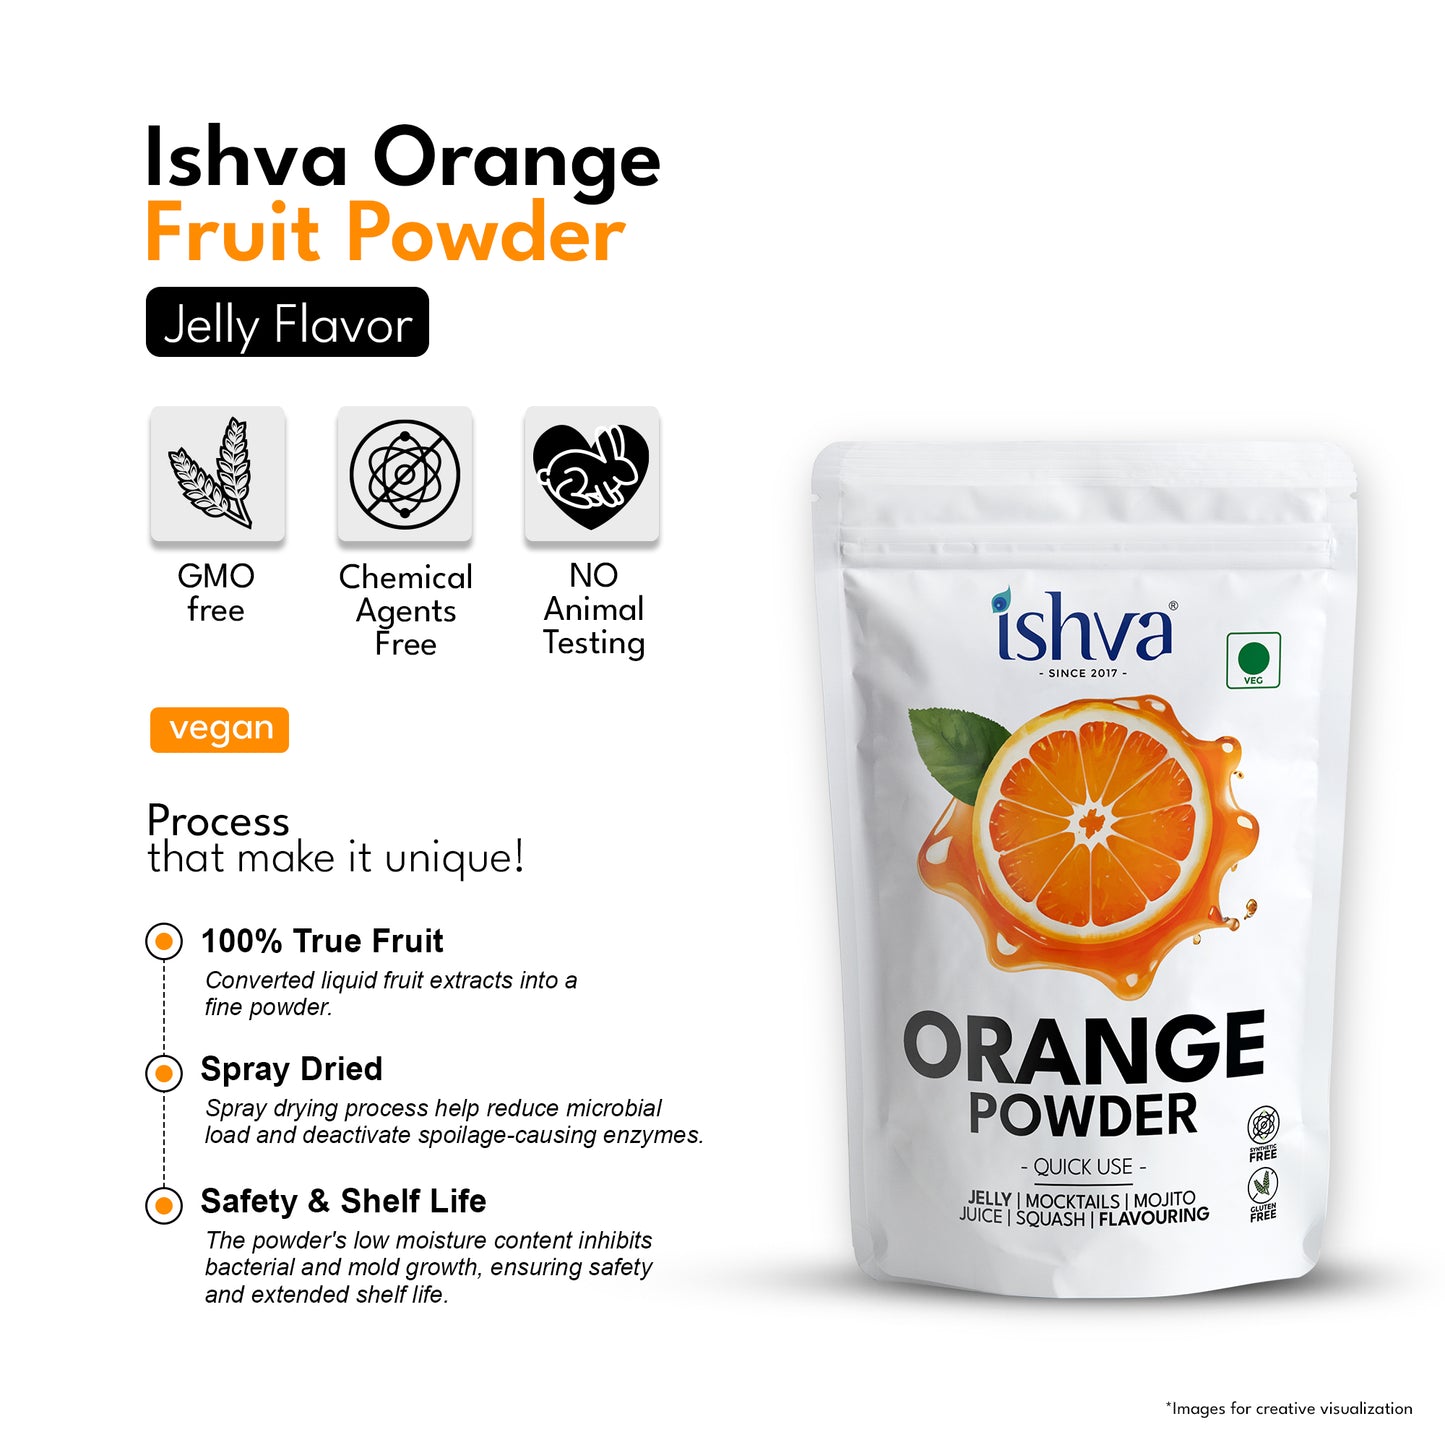 Ishva Orange Powder - Flavor for Jelly